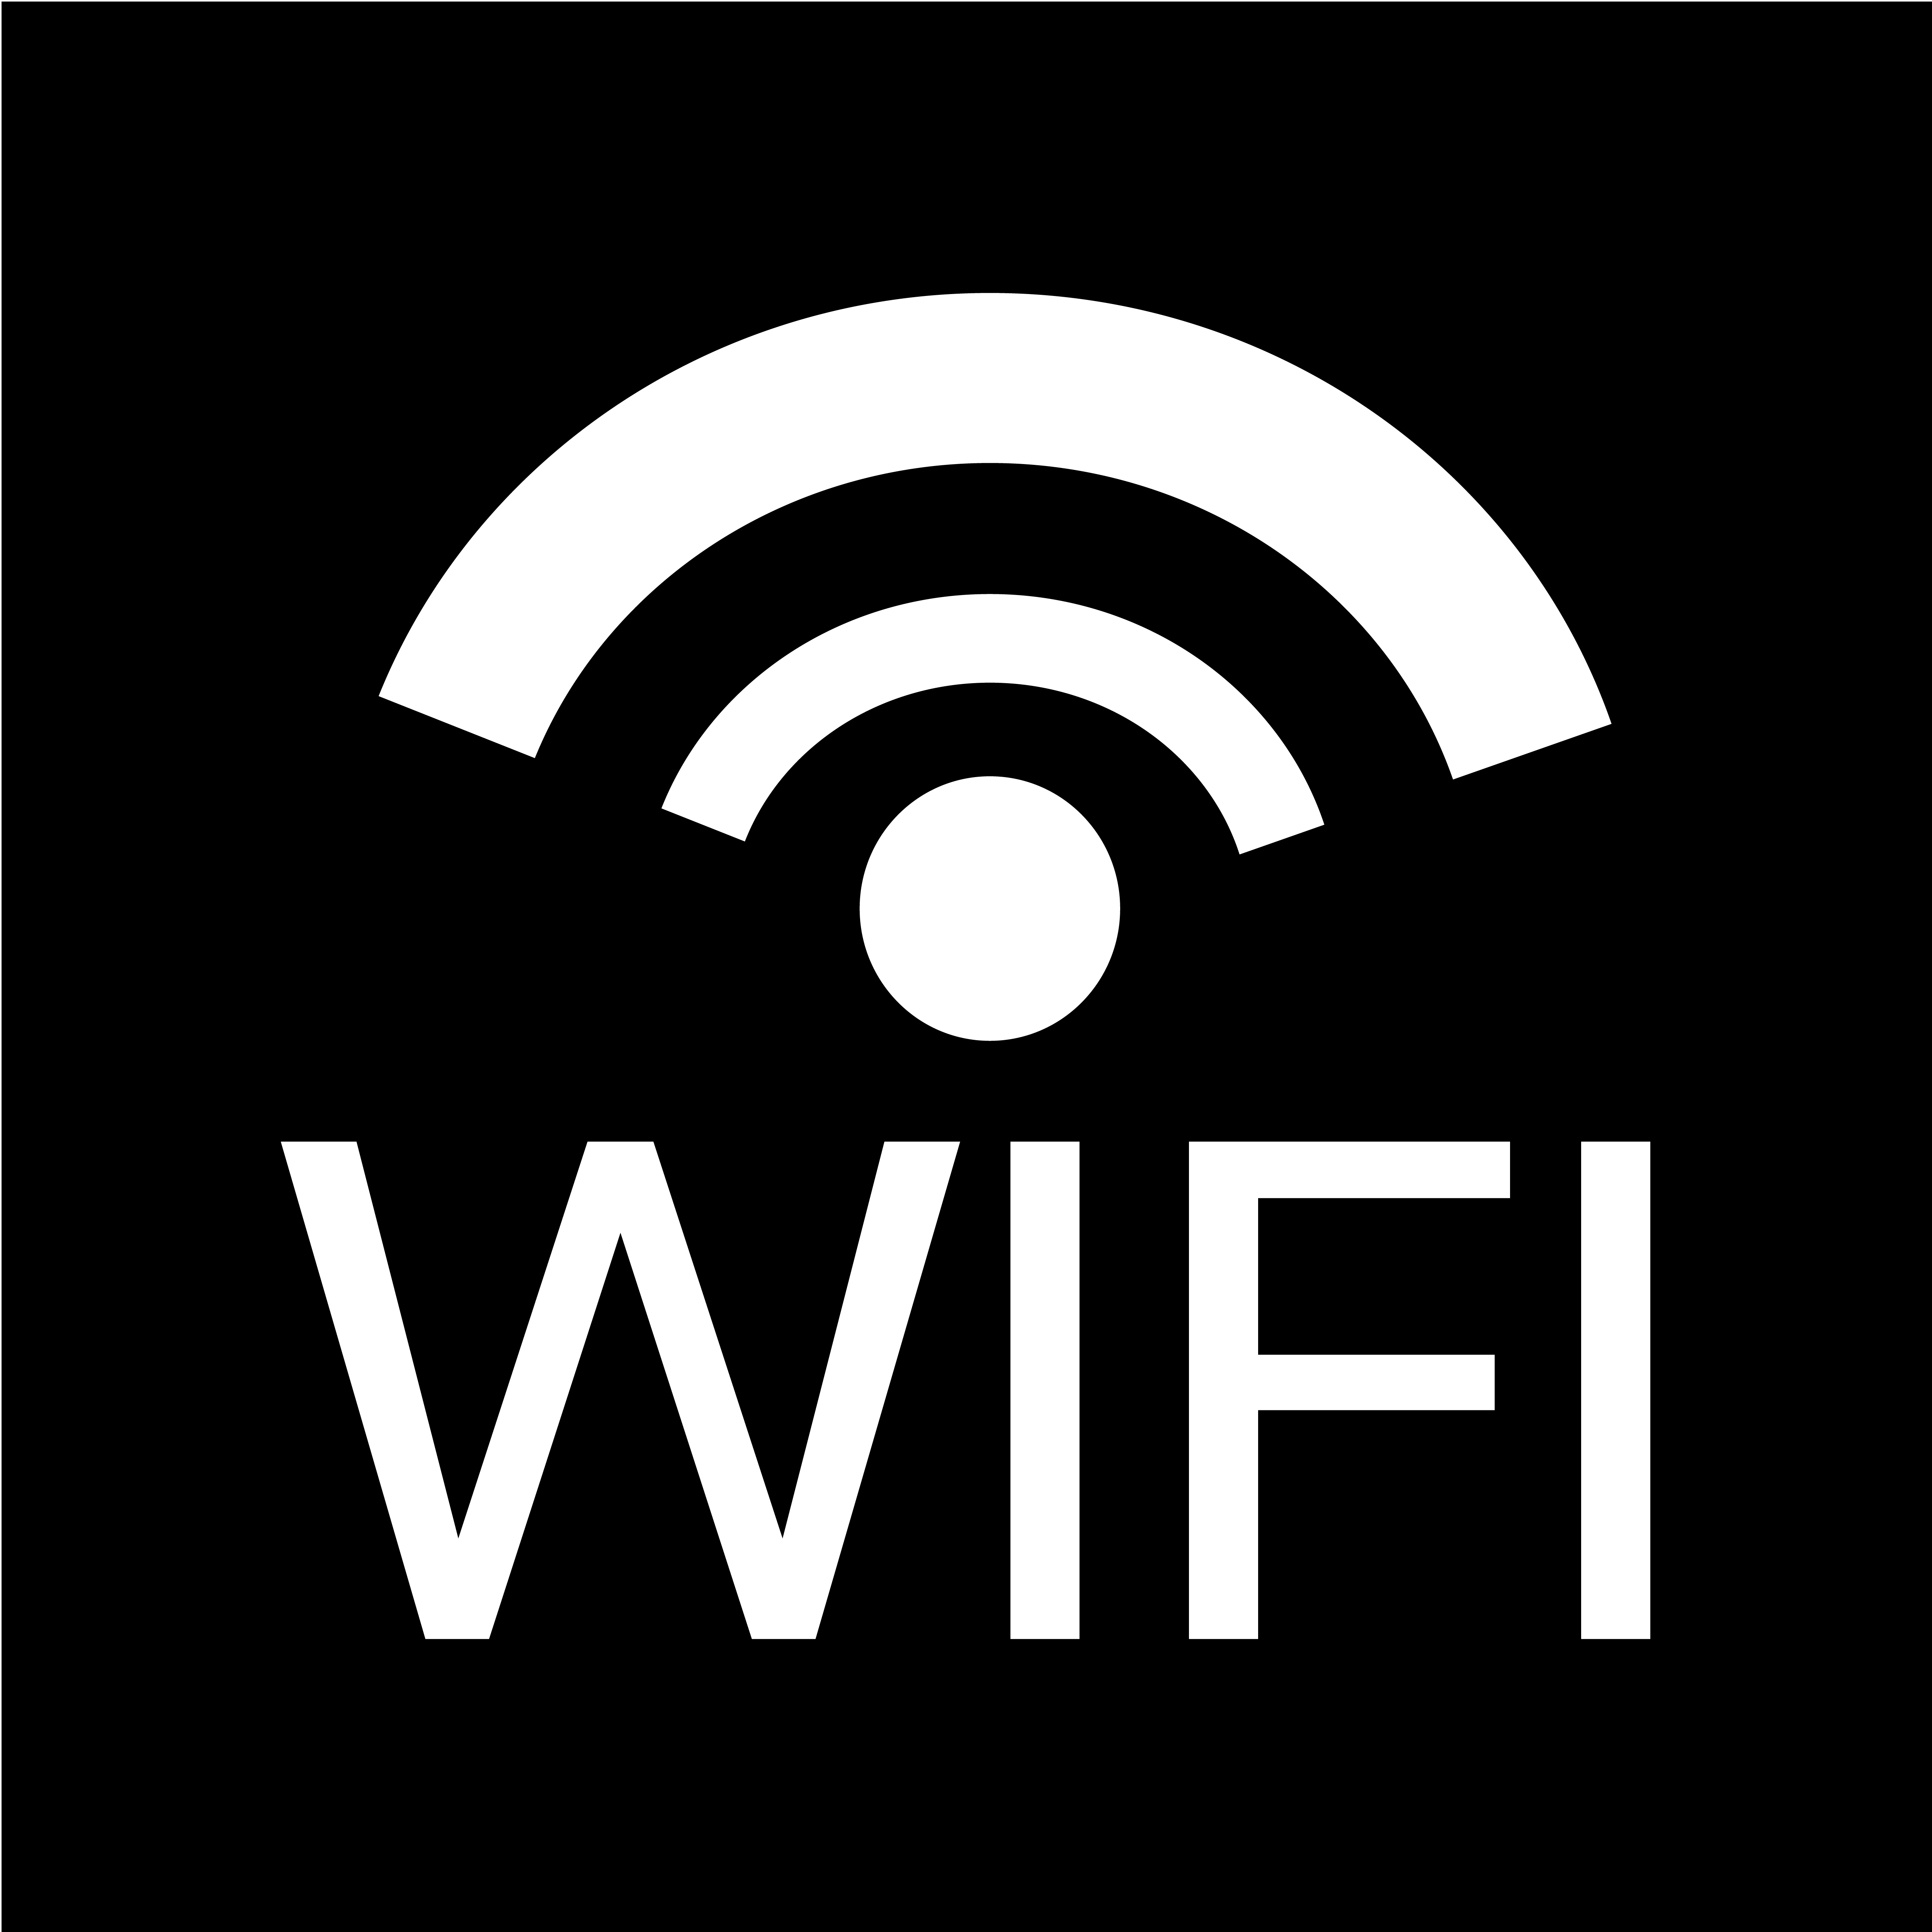 Network Wifi Wireless Vector Hd Images, Wifi Network Icon, Wifi Icons, Network Icons, Wifi PNG ...